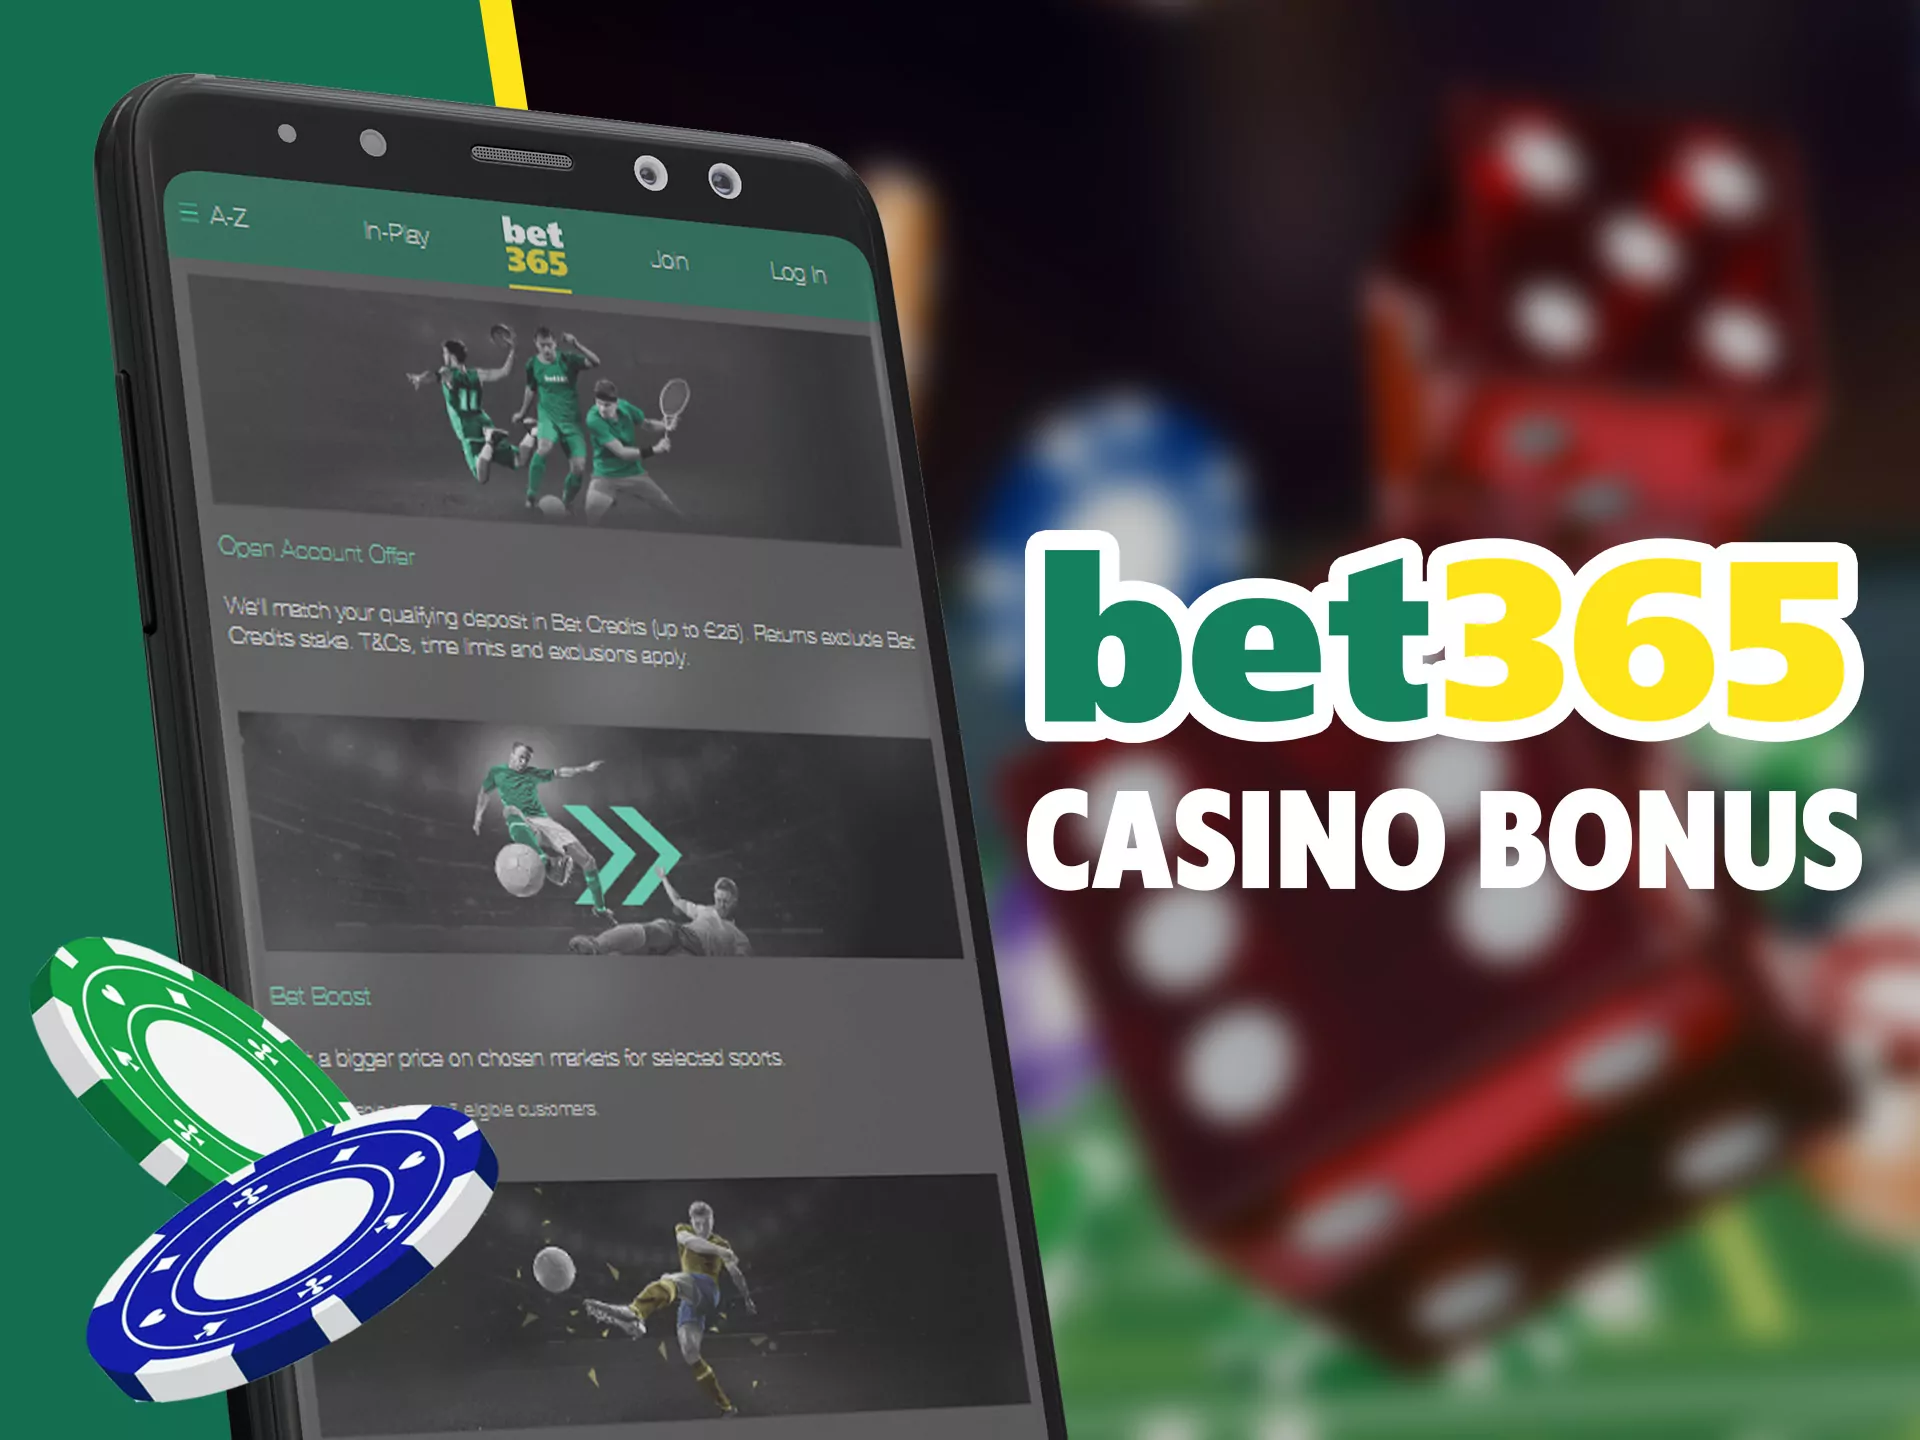 Claim Bet365 casino bonus after registration.